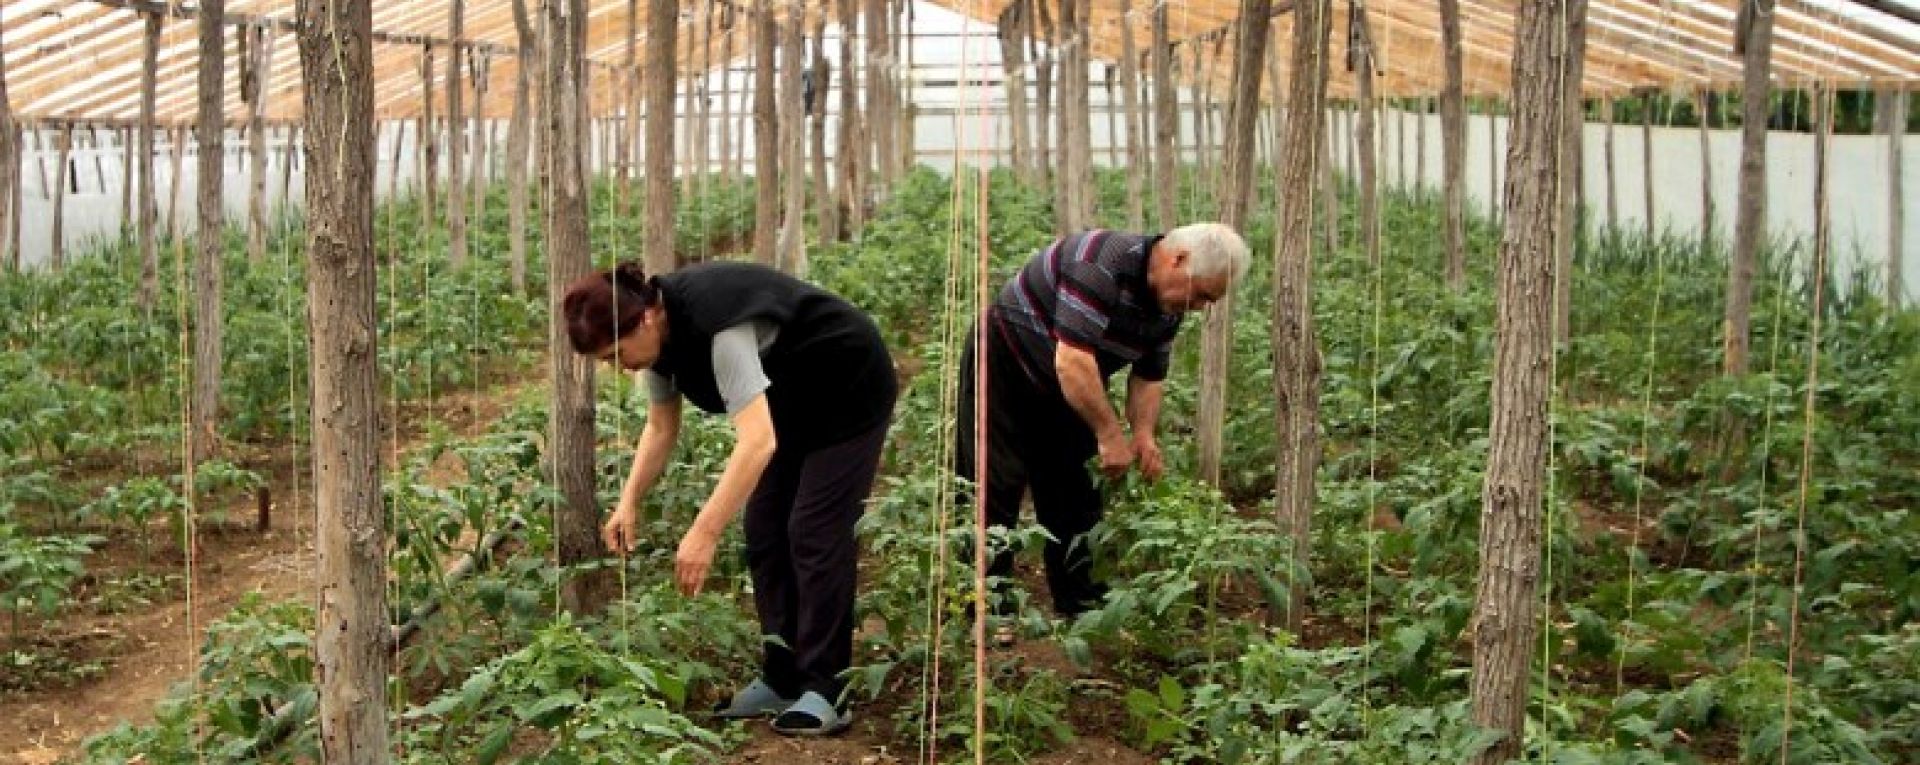 Two Georgian farmers tending to crops